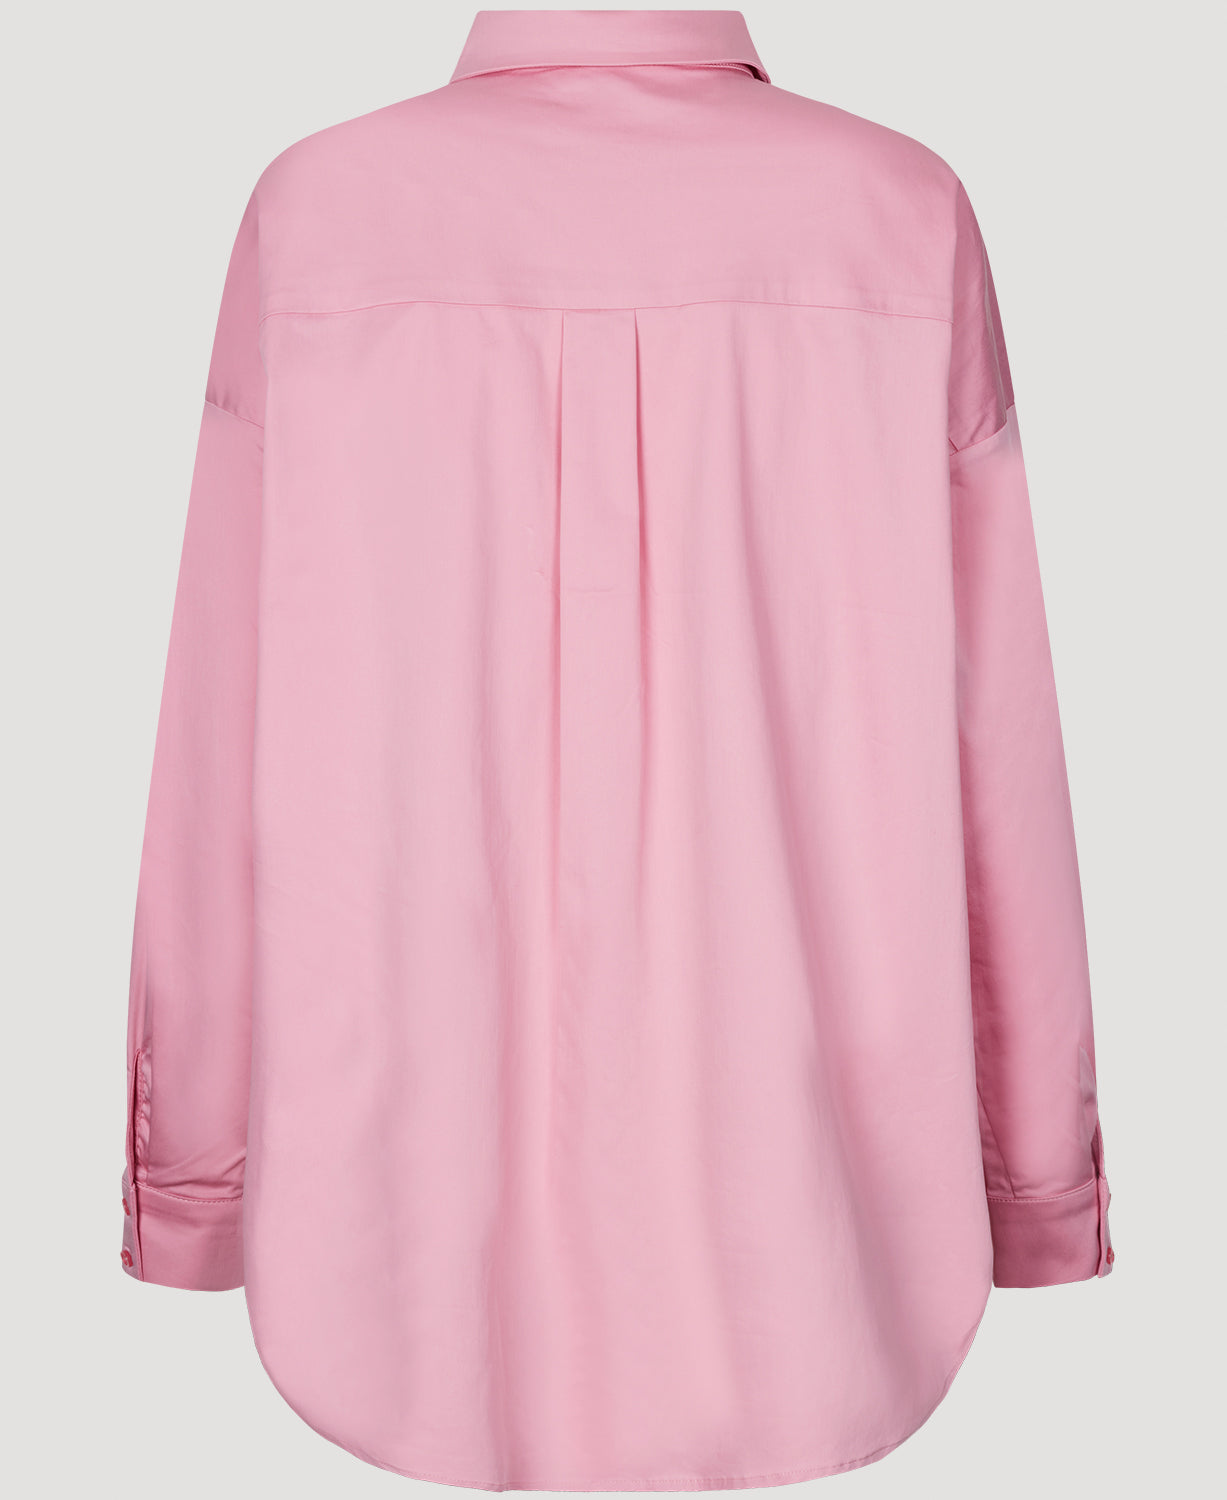 Notes du Nord Kira Shirt Shirt 335 Pink Blush